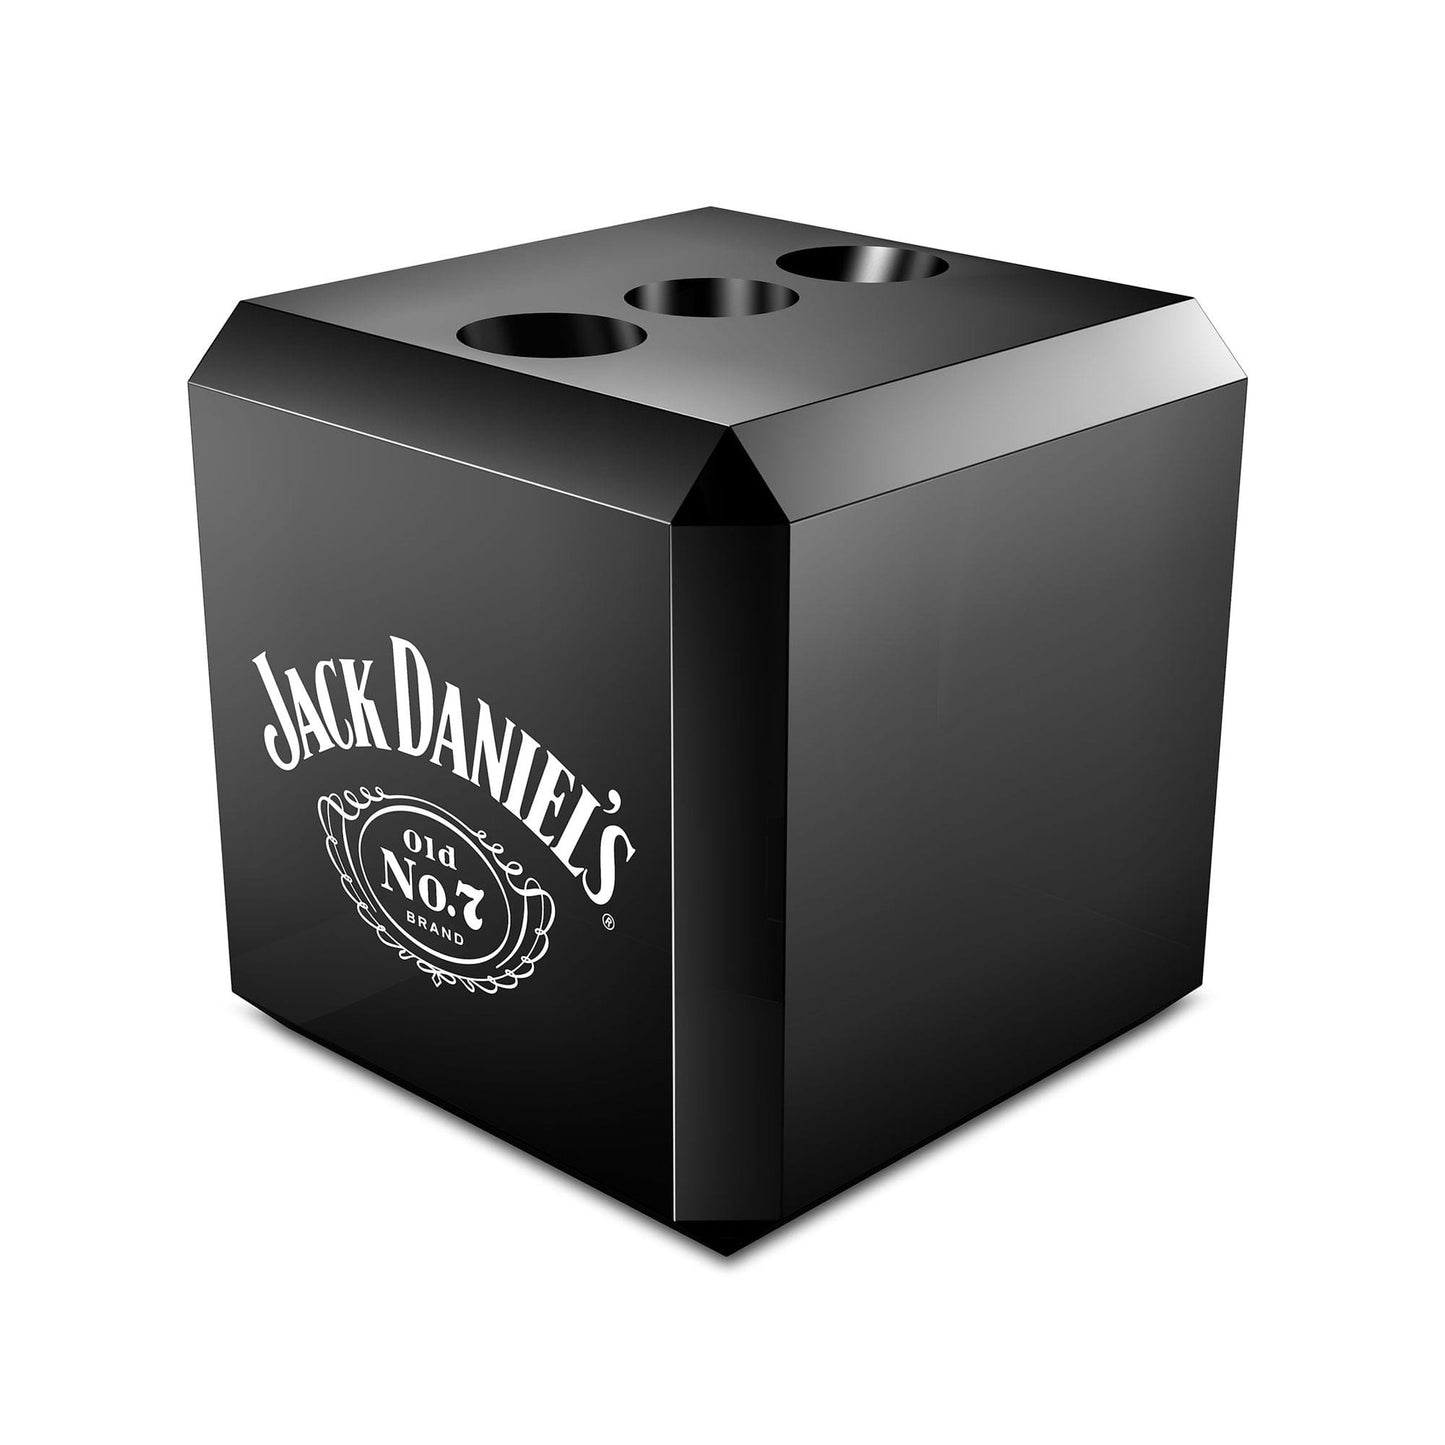 Jack Daniels - Dart Display Cube - Holds 3 Darts - Acrylic Stand - Black